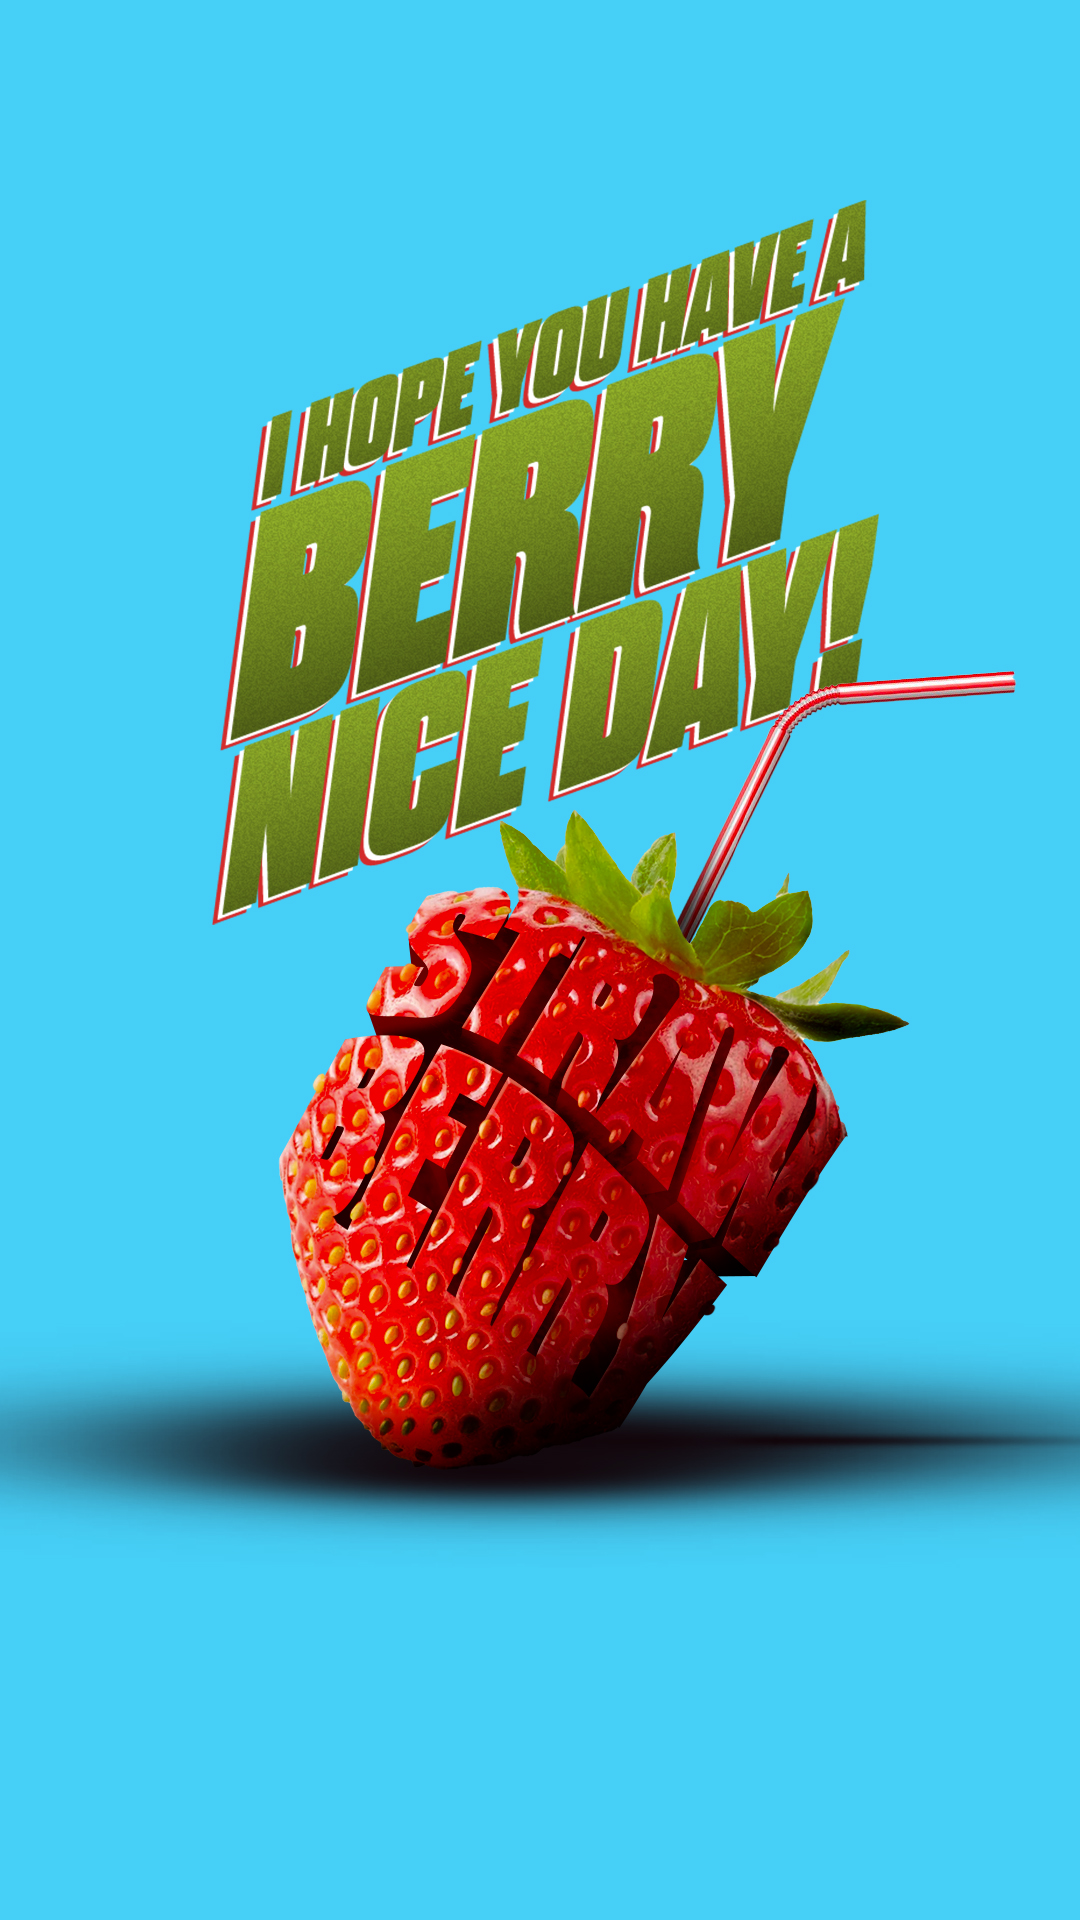 Strawberry Poster